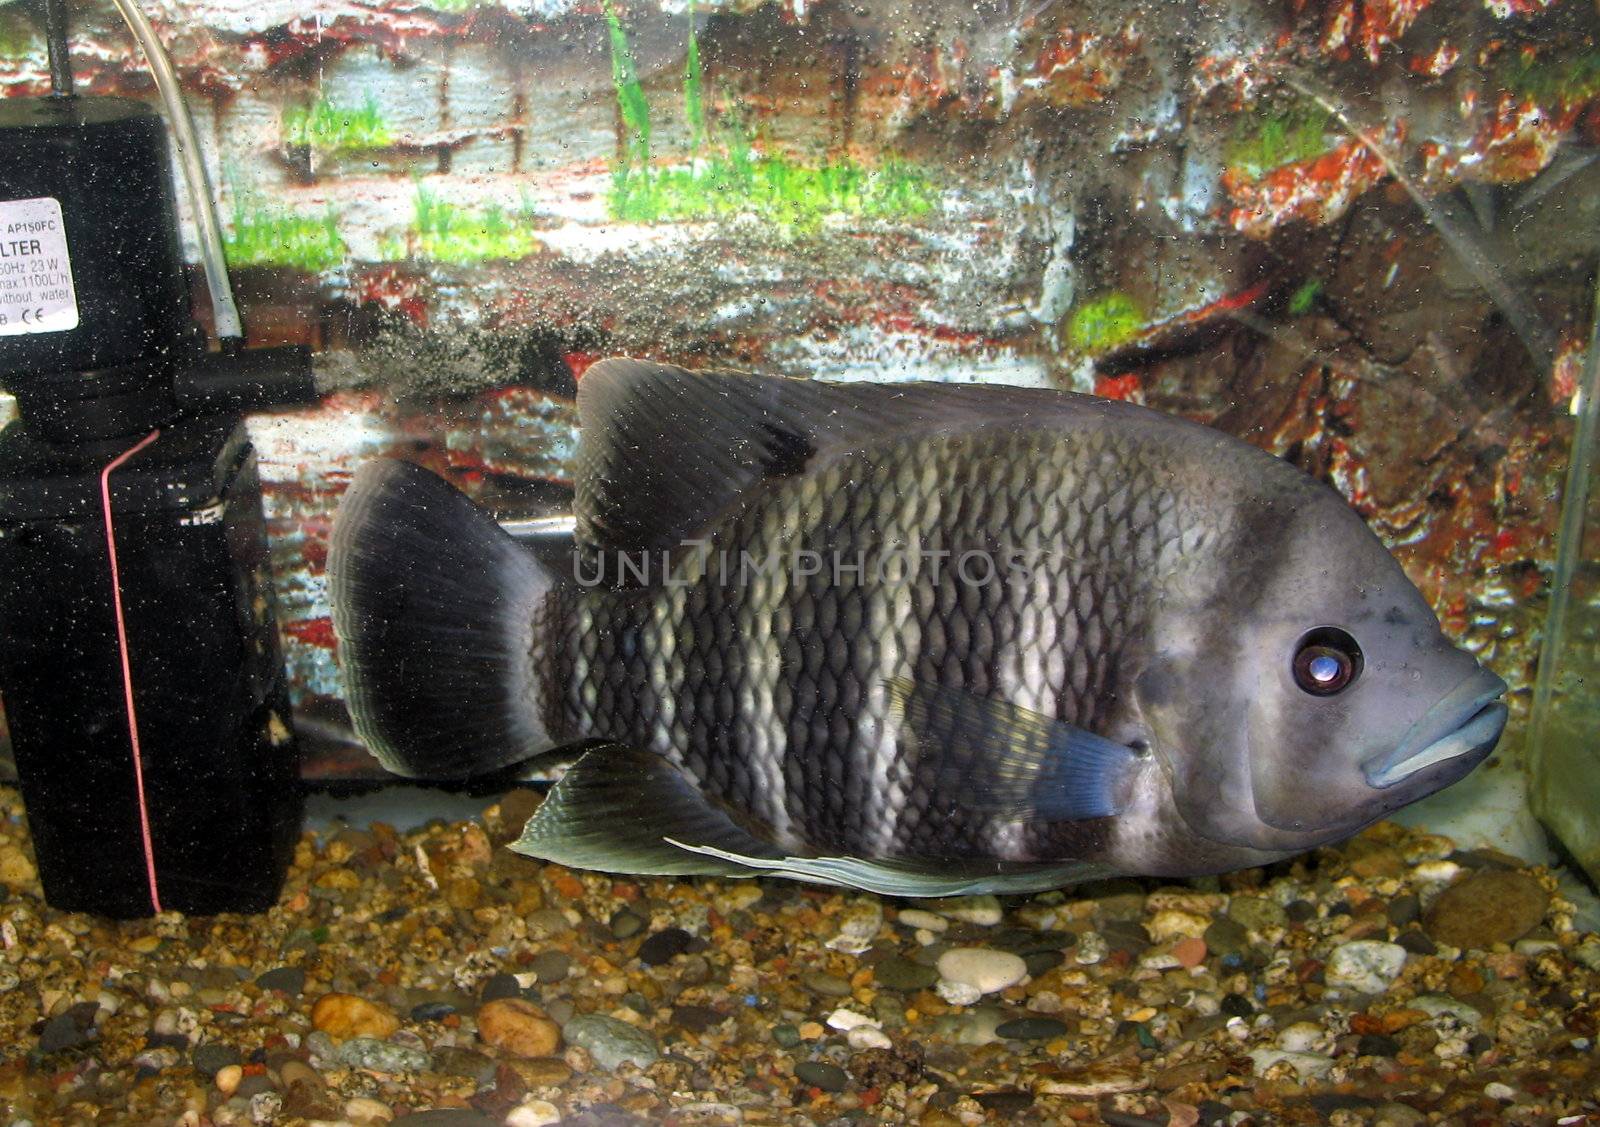 Striped fish in an aquarium